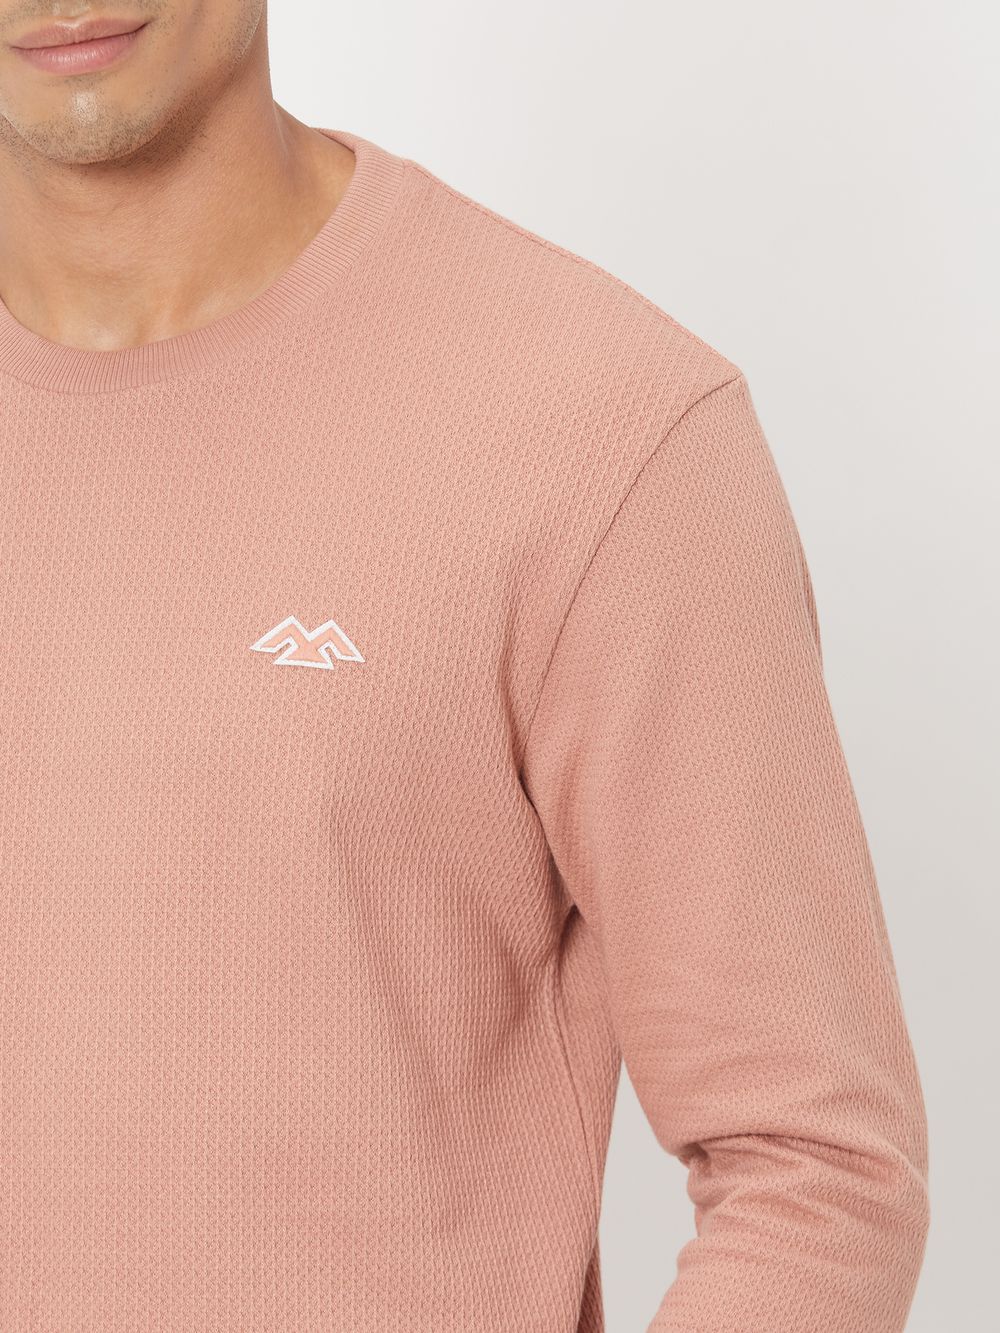 Pink Embroidered Jacquard Textured Jersey Sweatshirt